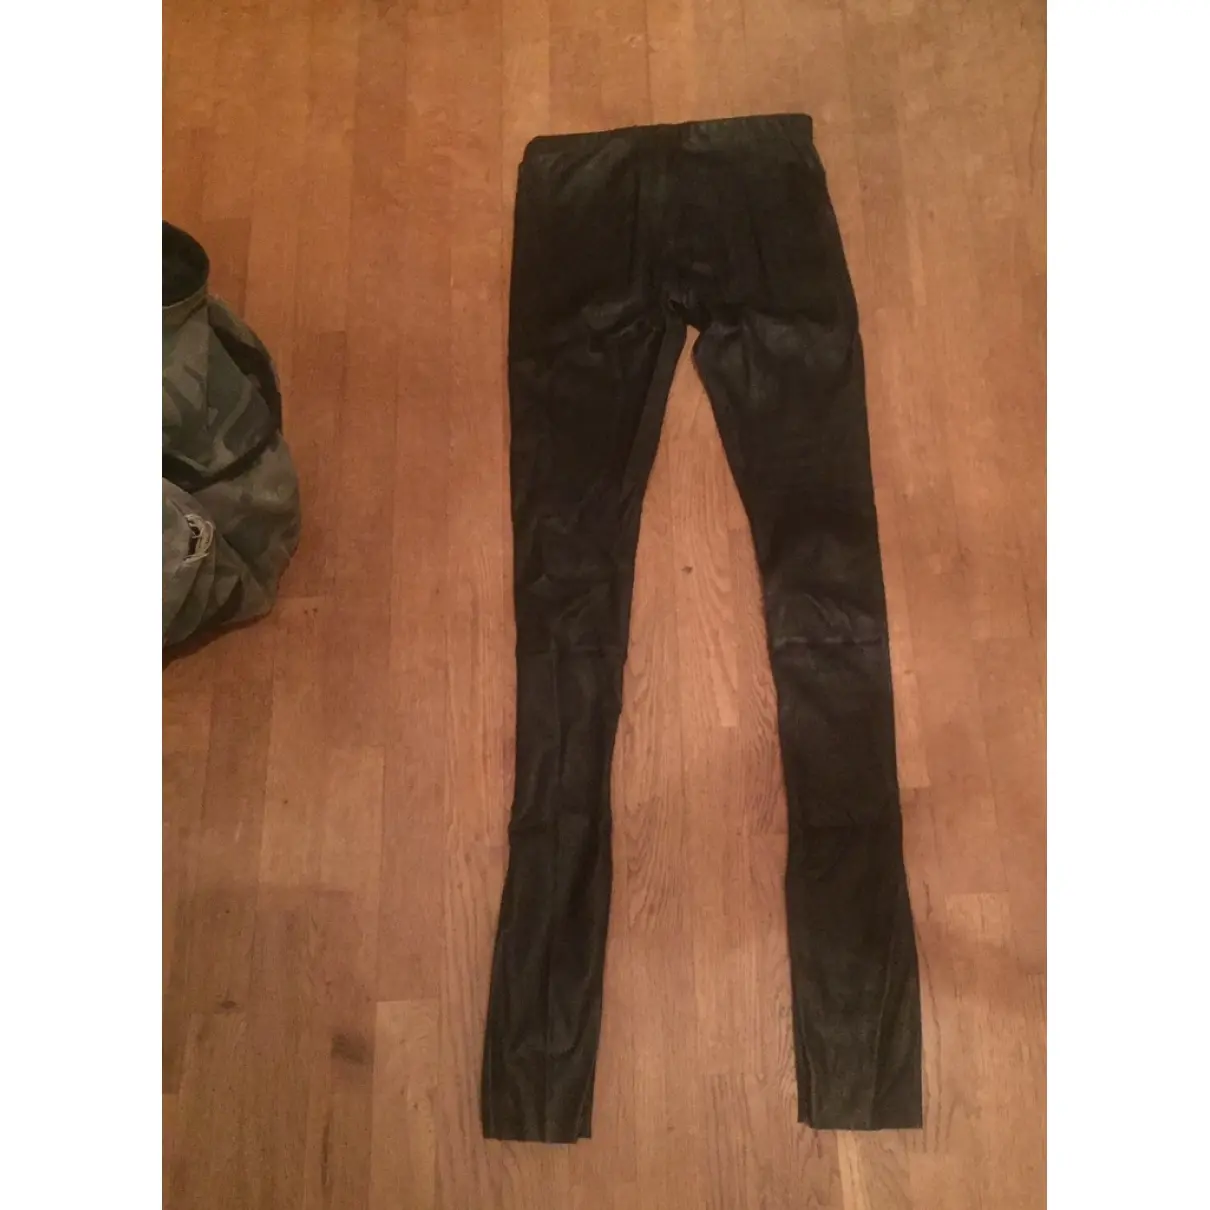 Buy Parosh Leather slim pants online